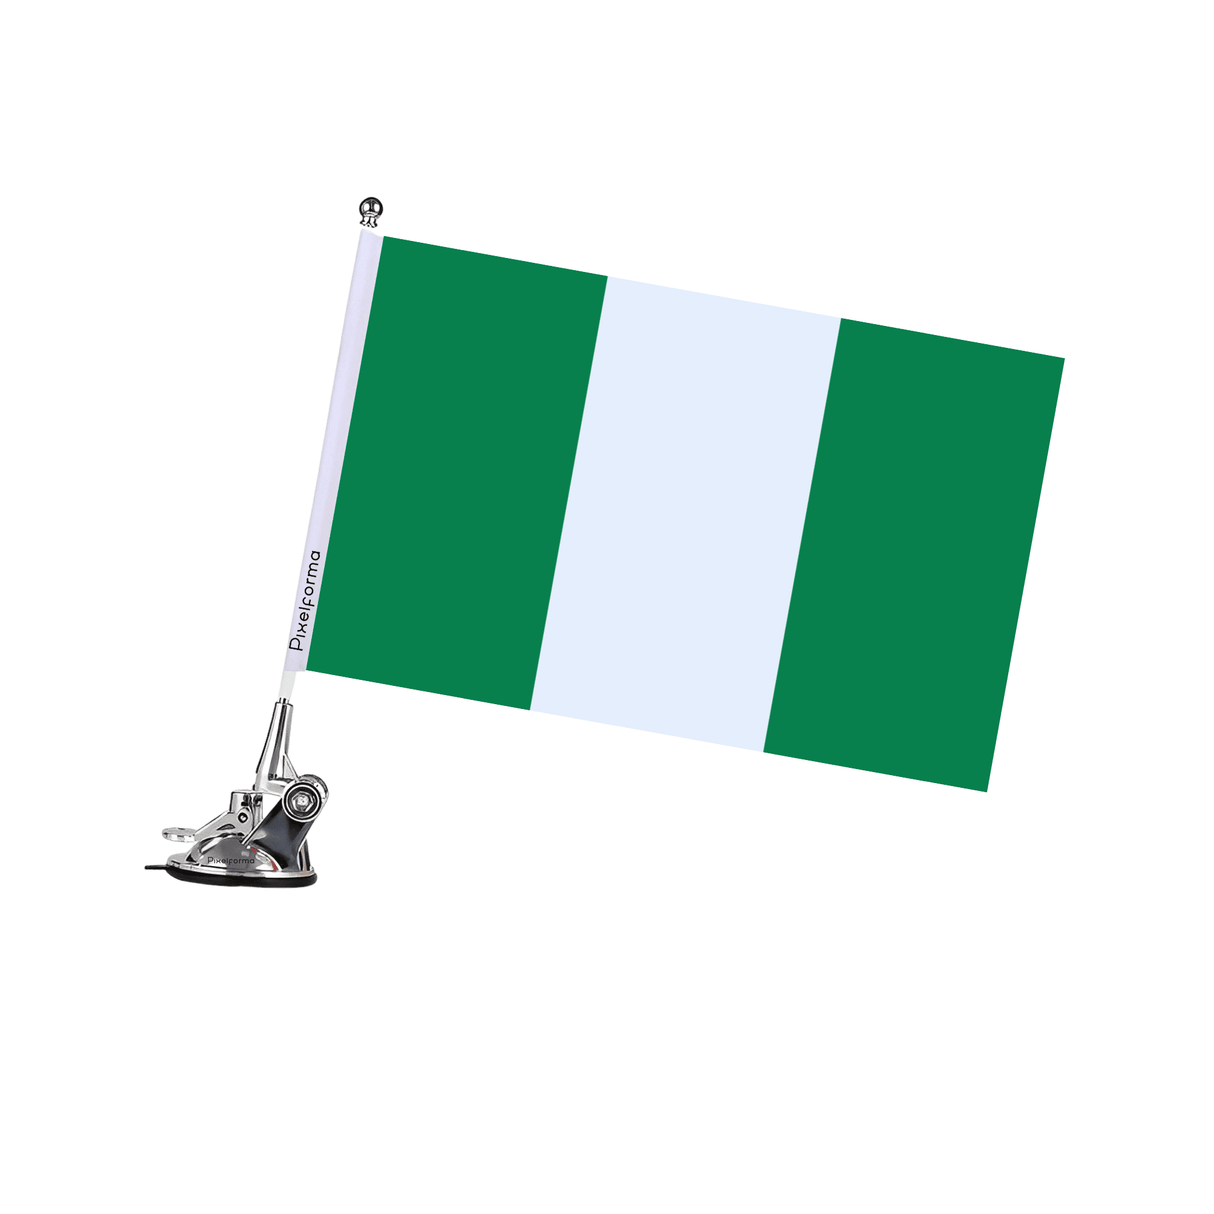 Mât à Ventouse Drapeau du Nigeria - Pixelforma 